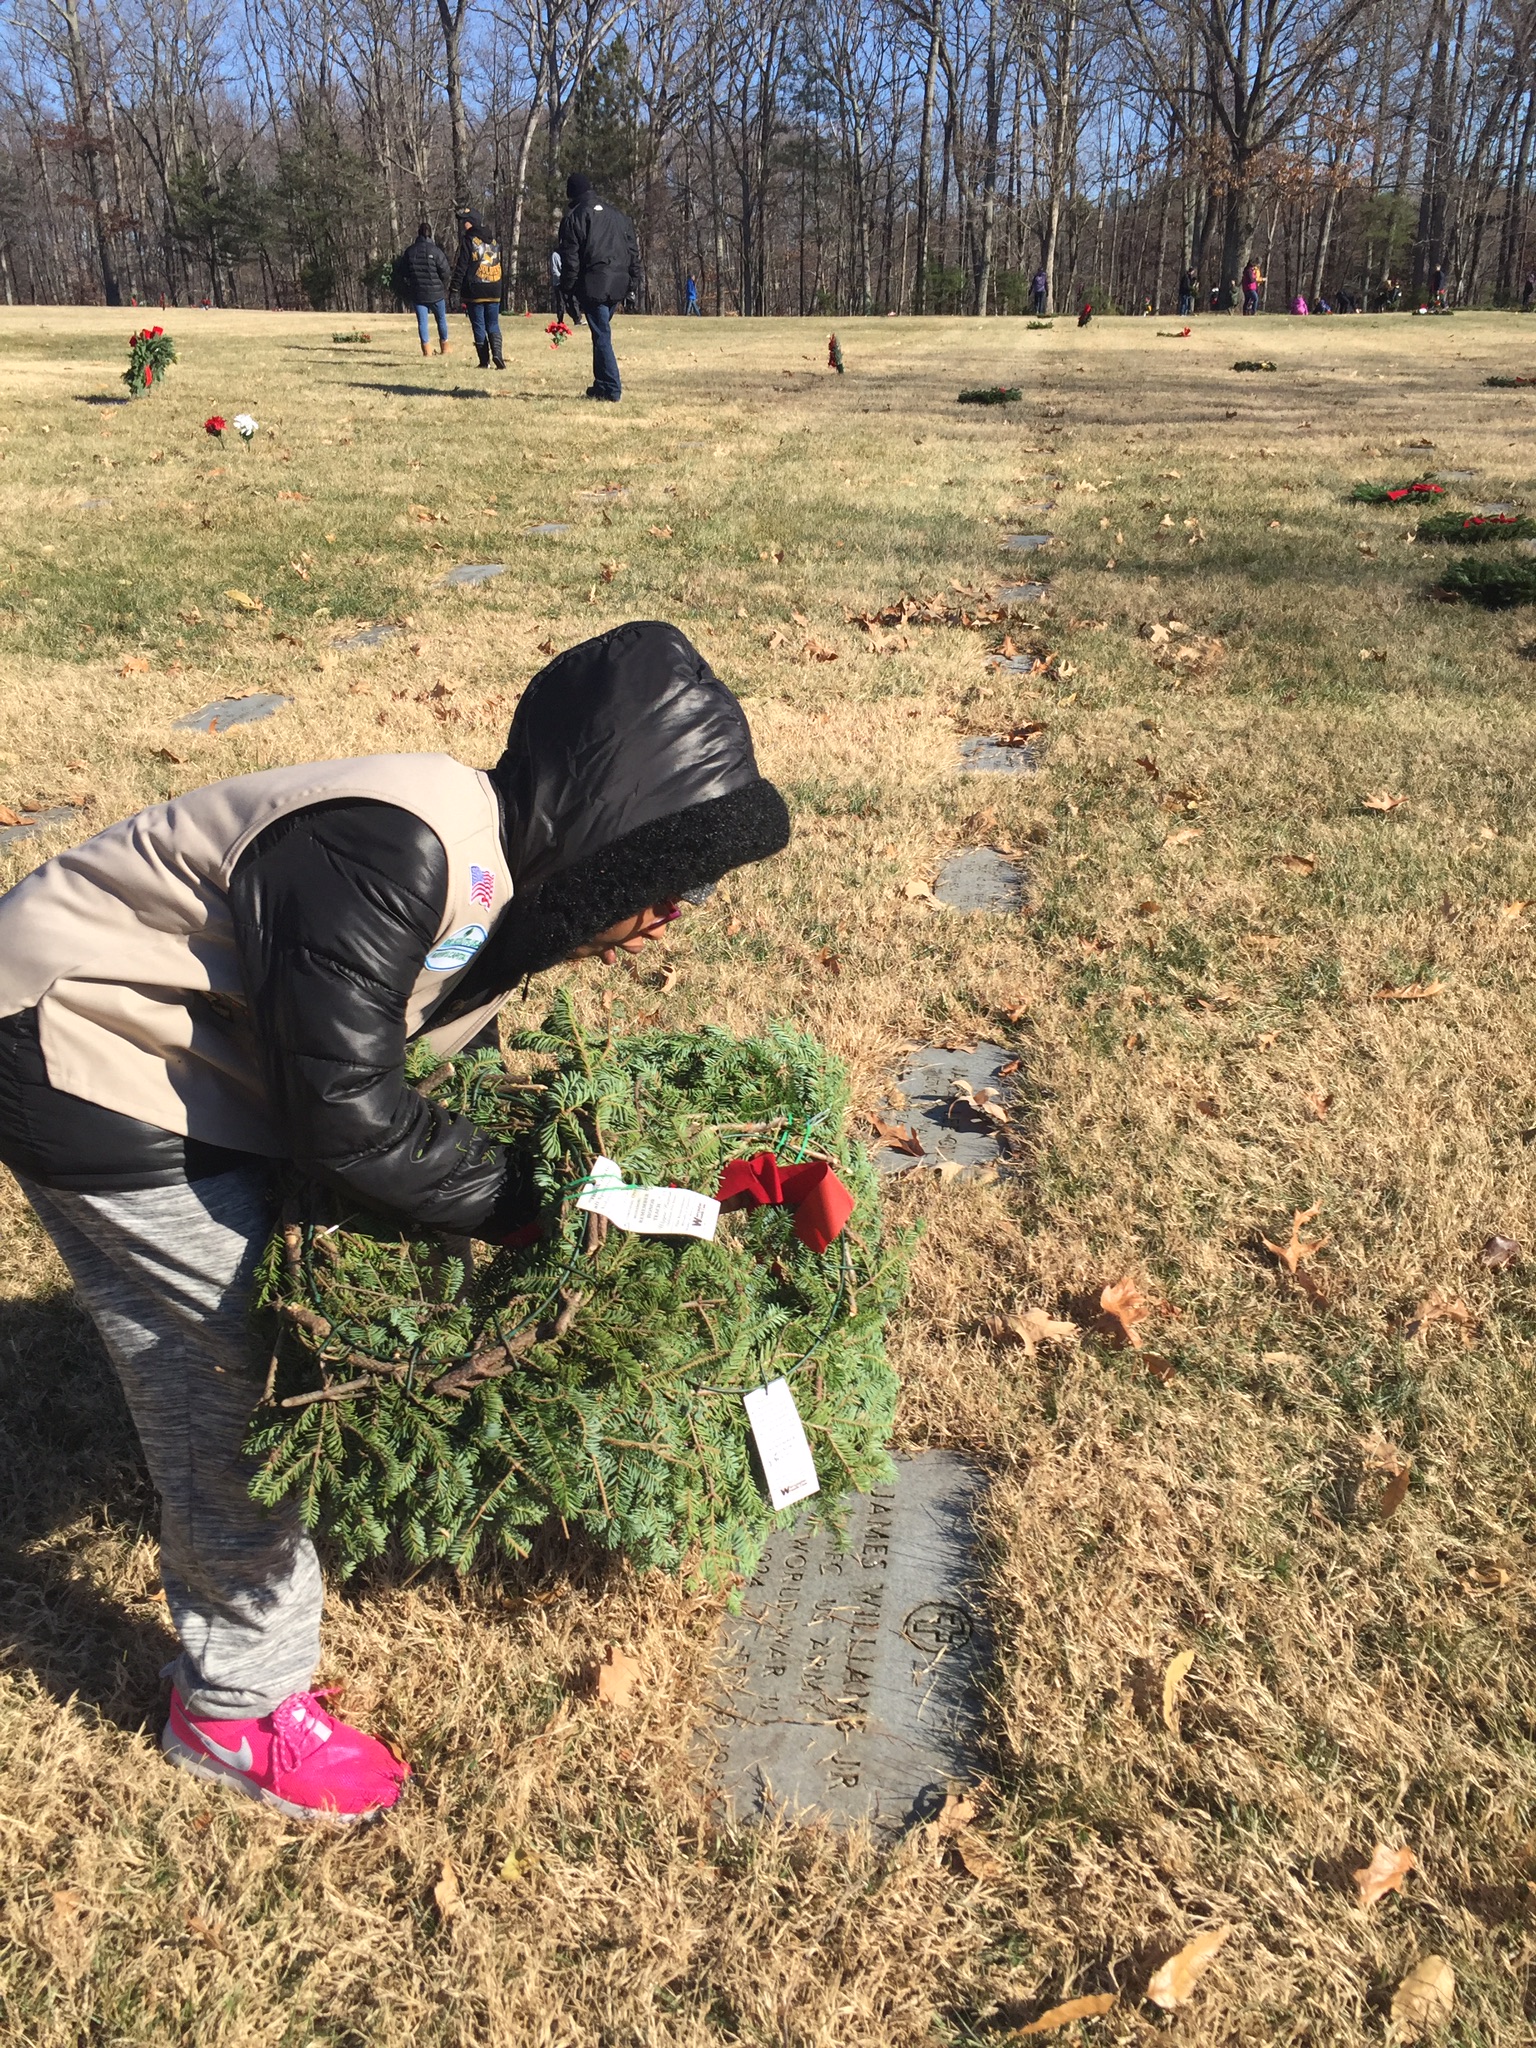 Ambassador Julia lays wreaths on the graves of veterans